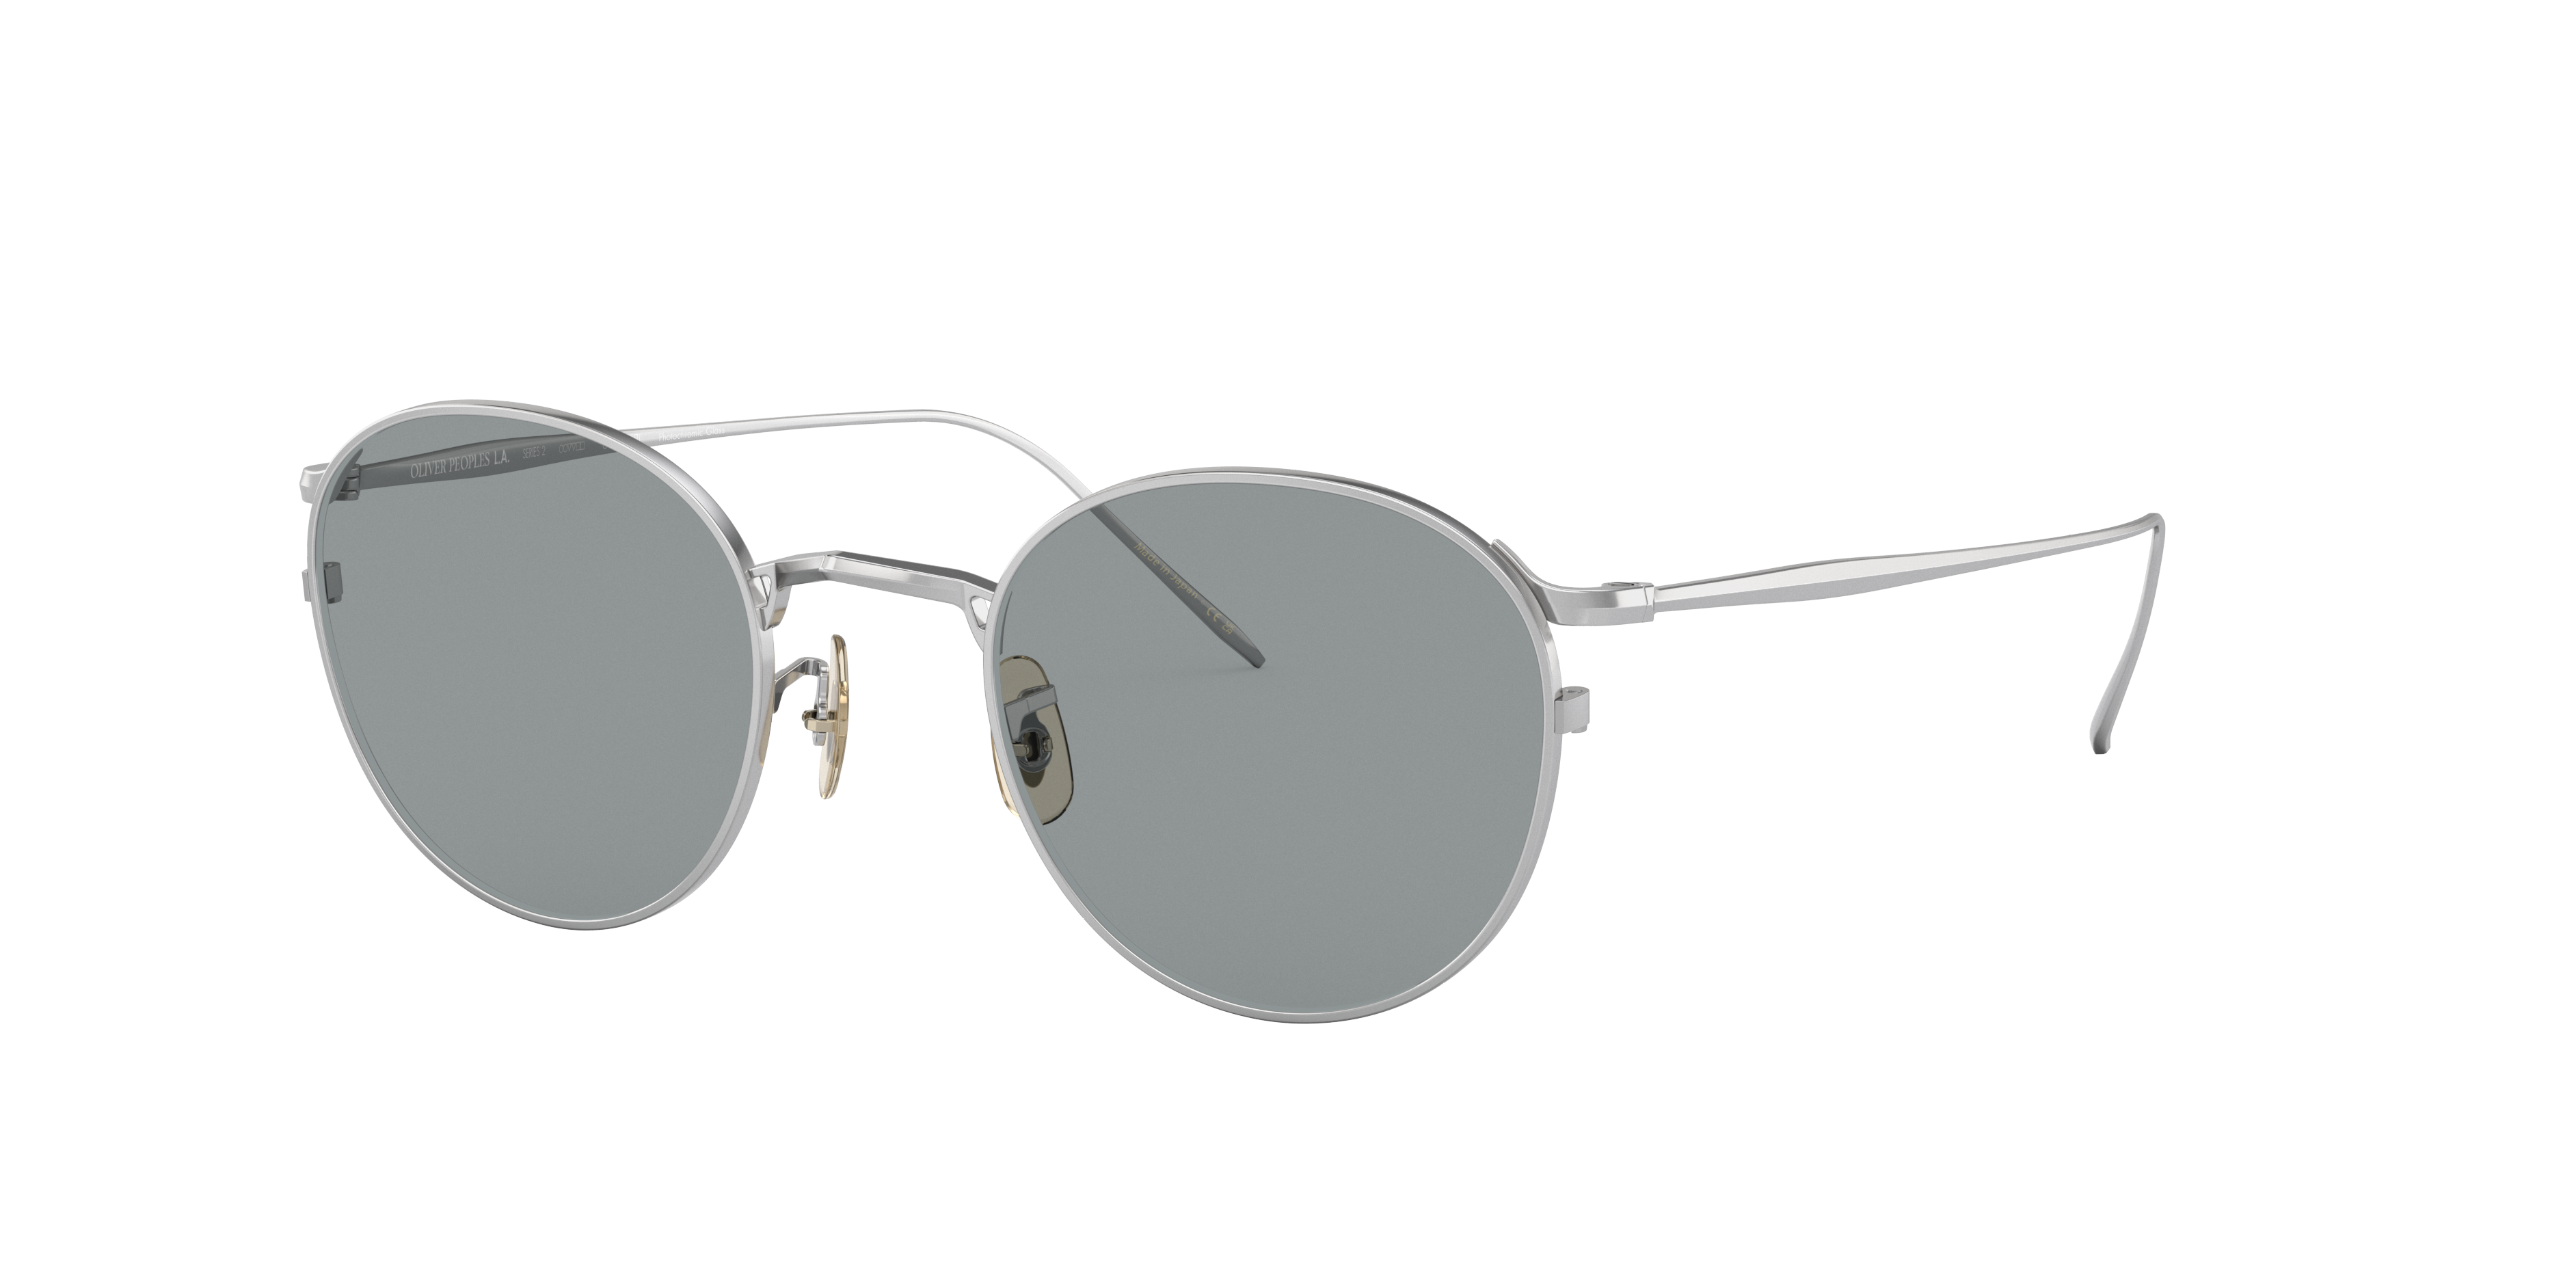 Oliver G.Ponti-4 Sunglasses in Silver | Oliver®